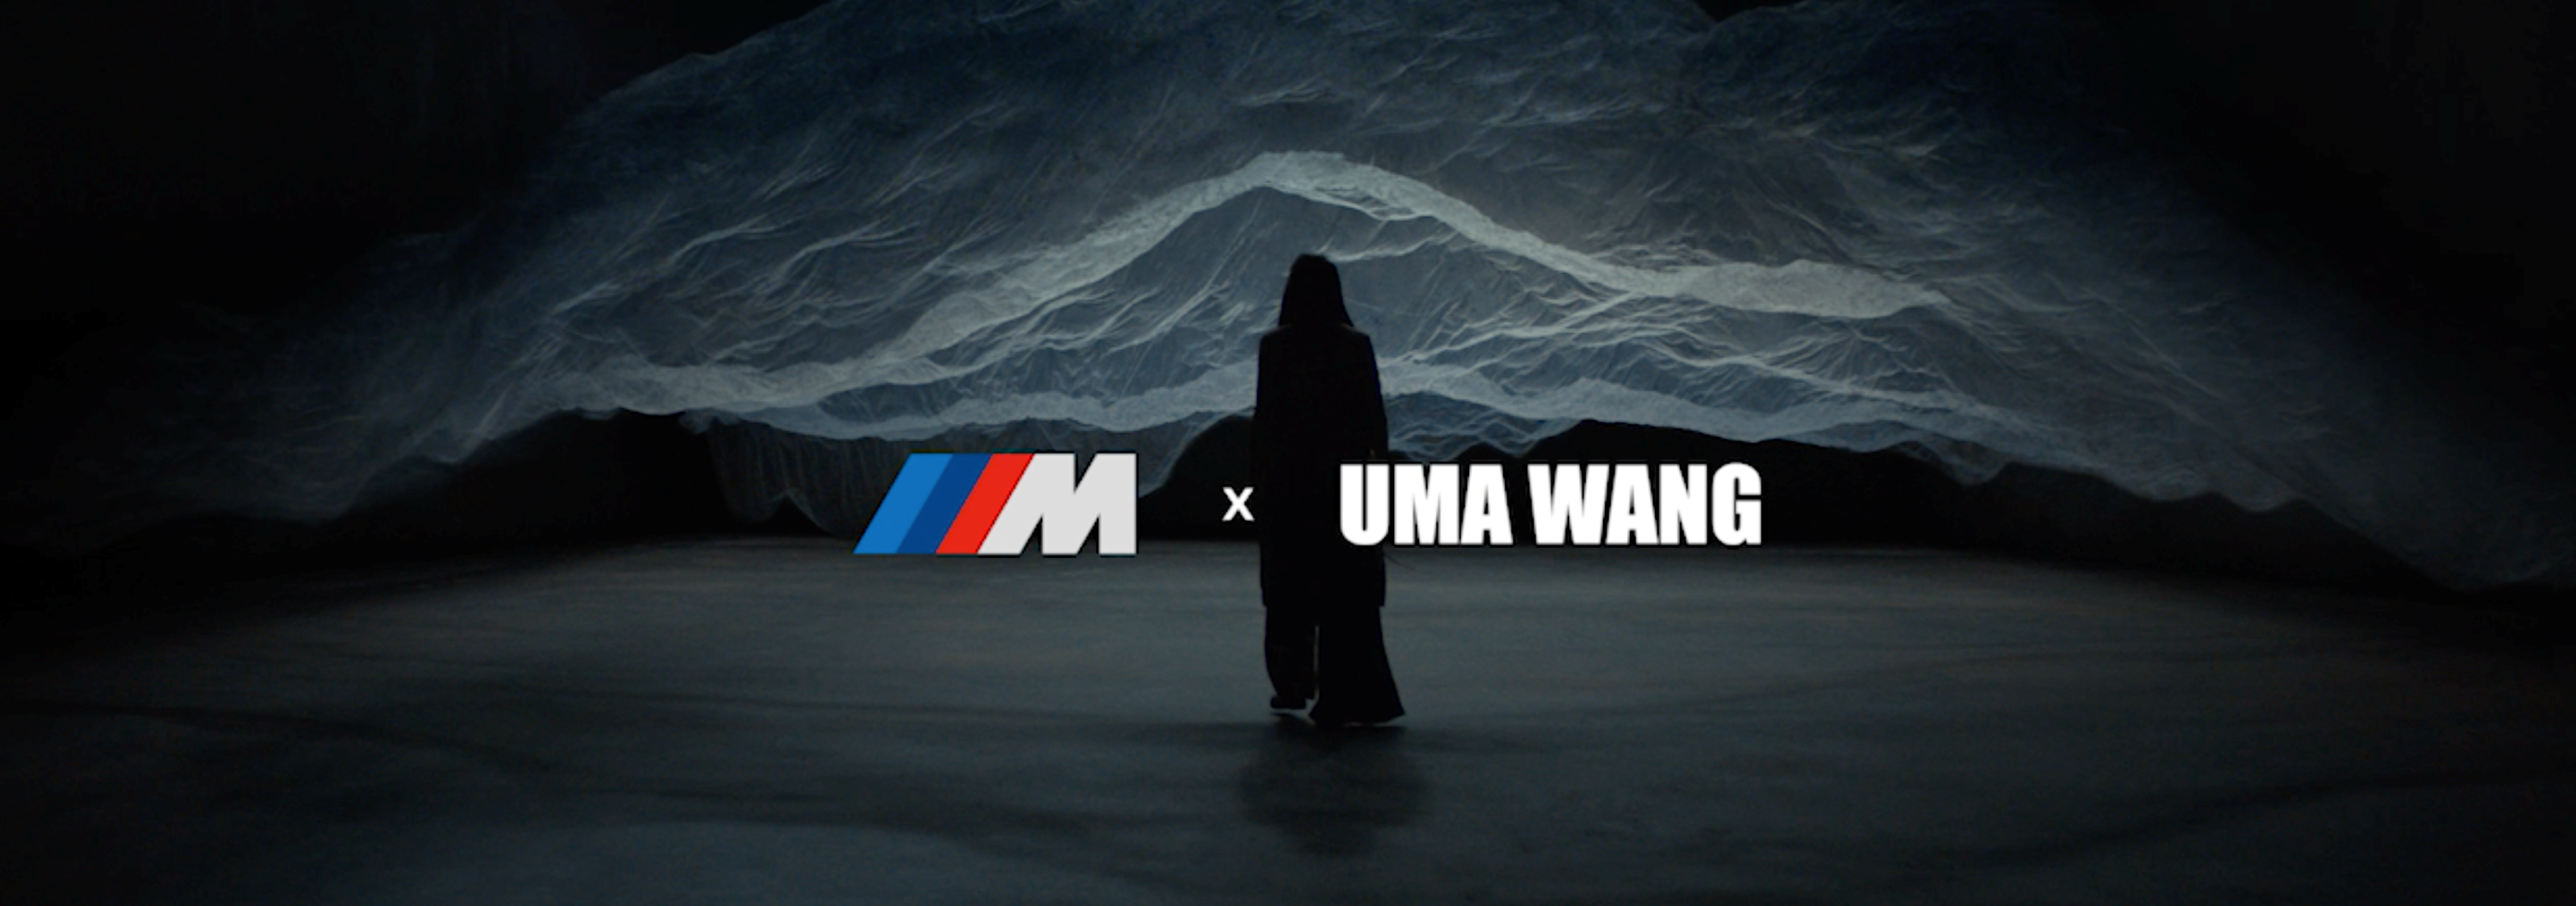 BMW  X  UMA WANG